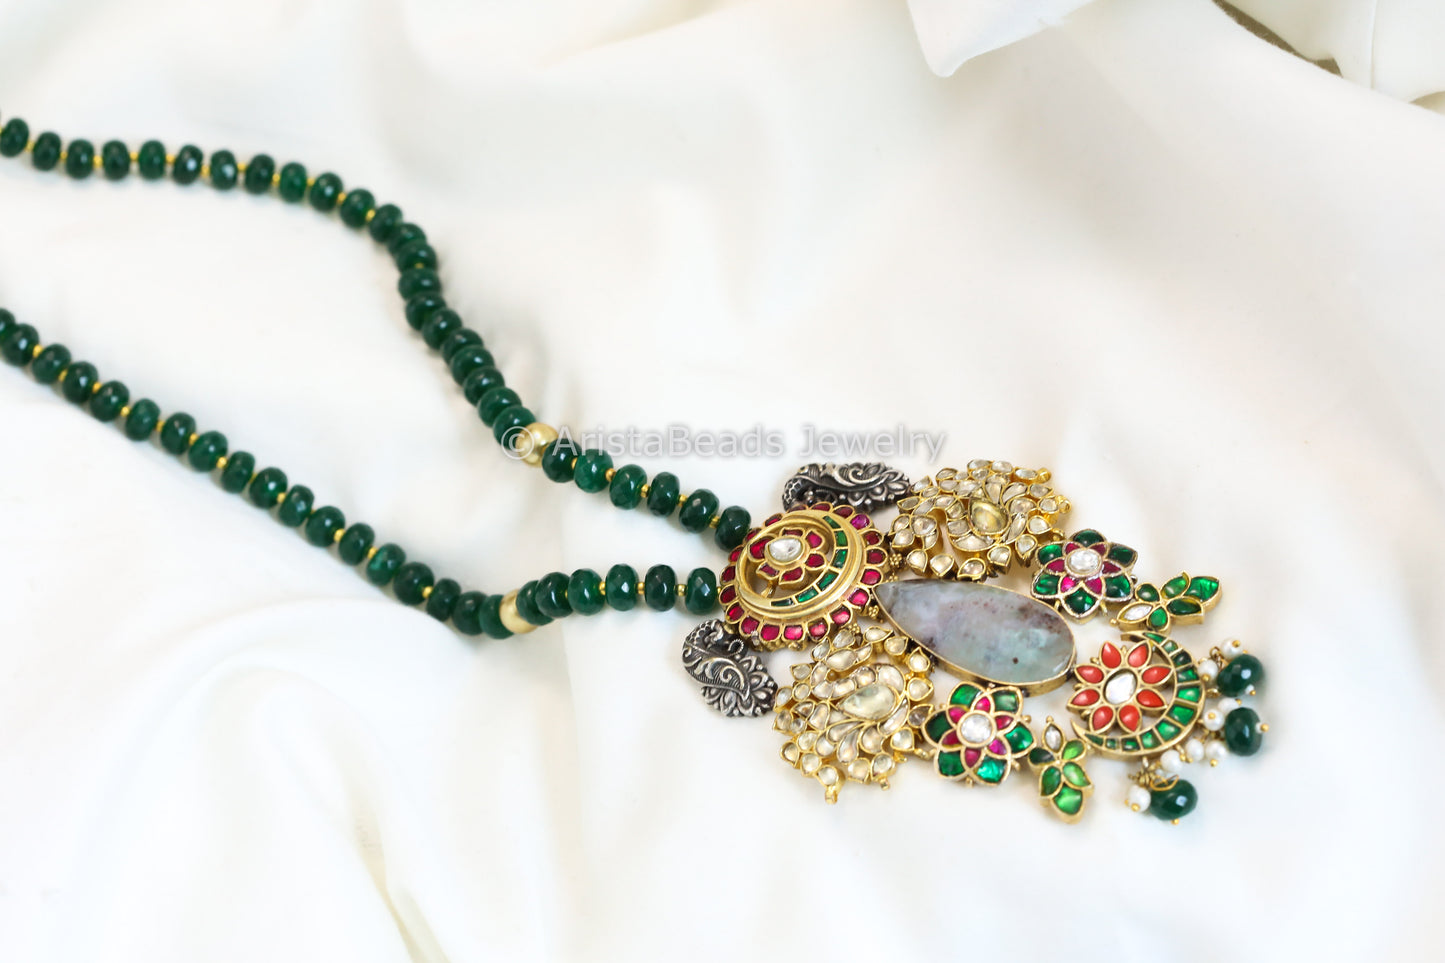 Kundan Jadau Fusion Necklace - Agate Beads